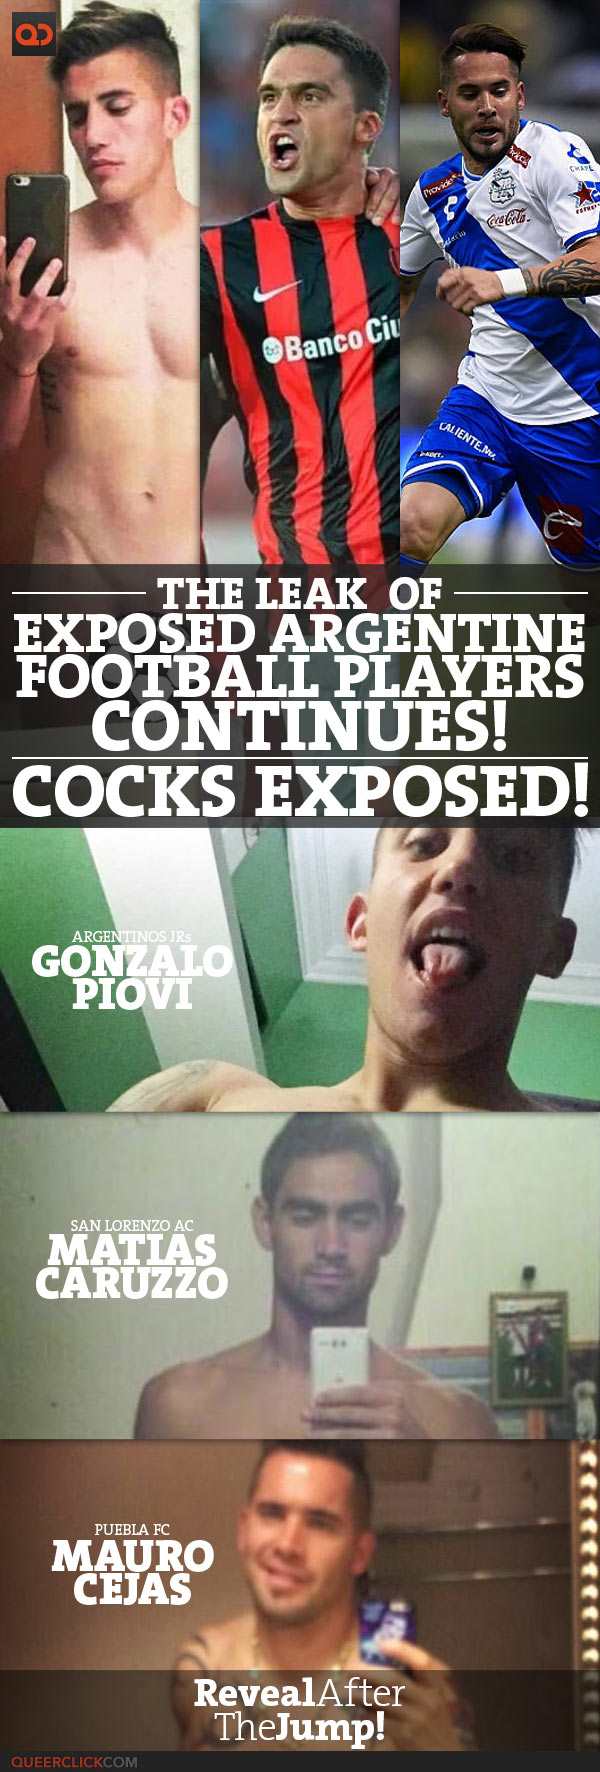 qc-exposed_celebs_argentine_football_players_gonzalo_piovi_matias_caruzzo_mauro_cejas_cocks_exposed-teaser